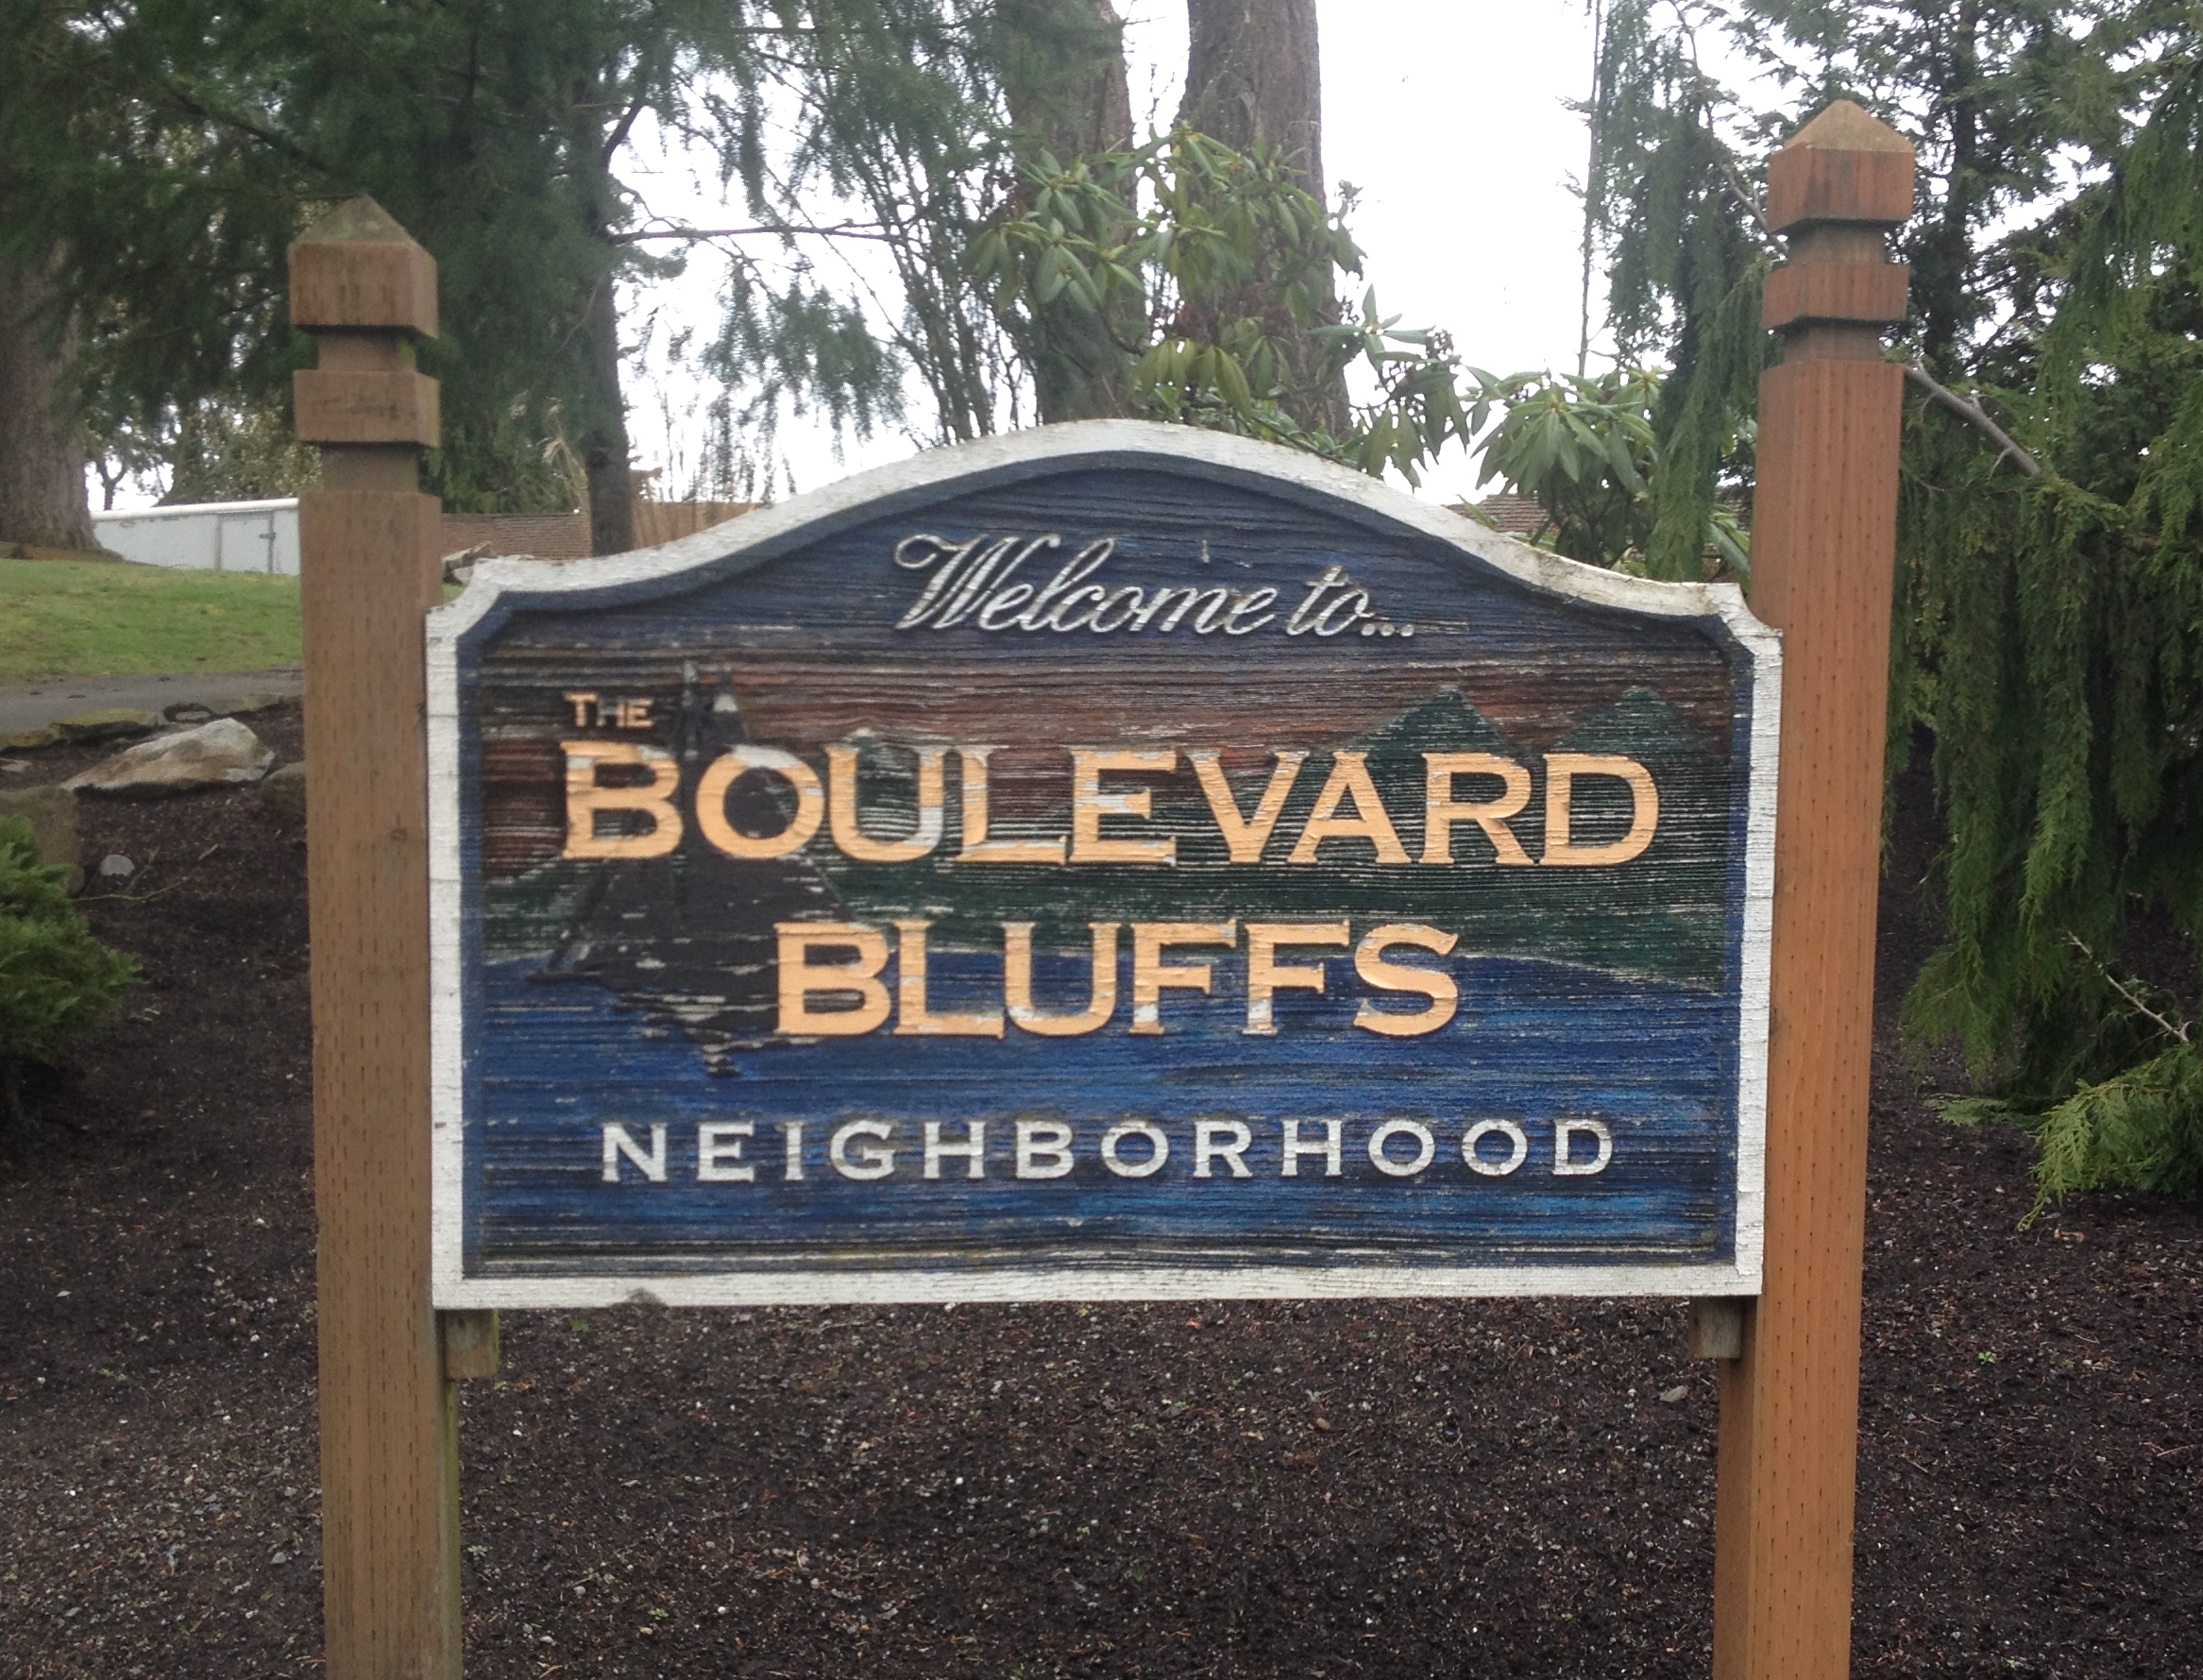 Homes for sale Boulevard Bluffs in Everett, Washington